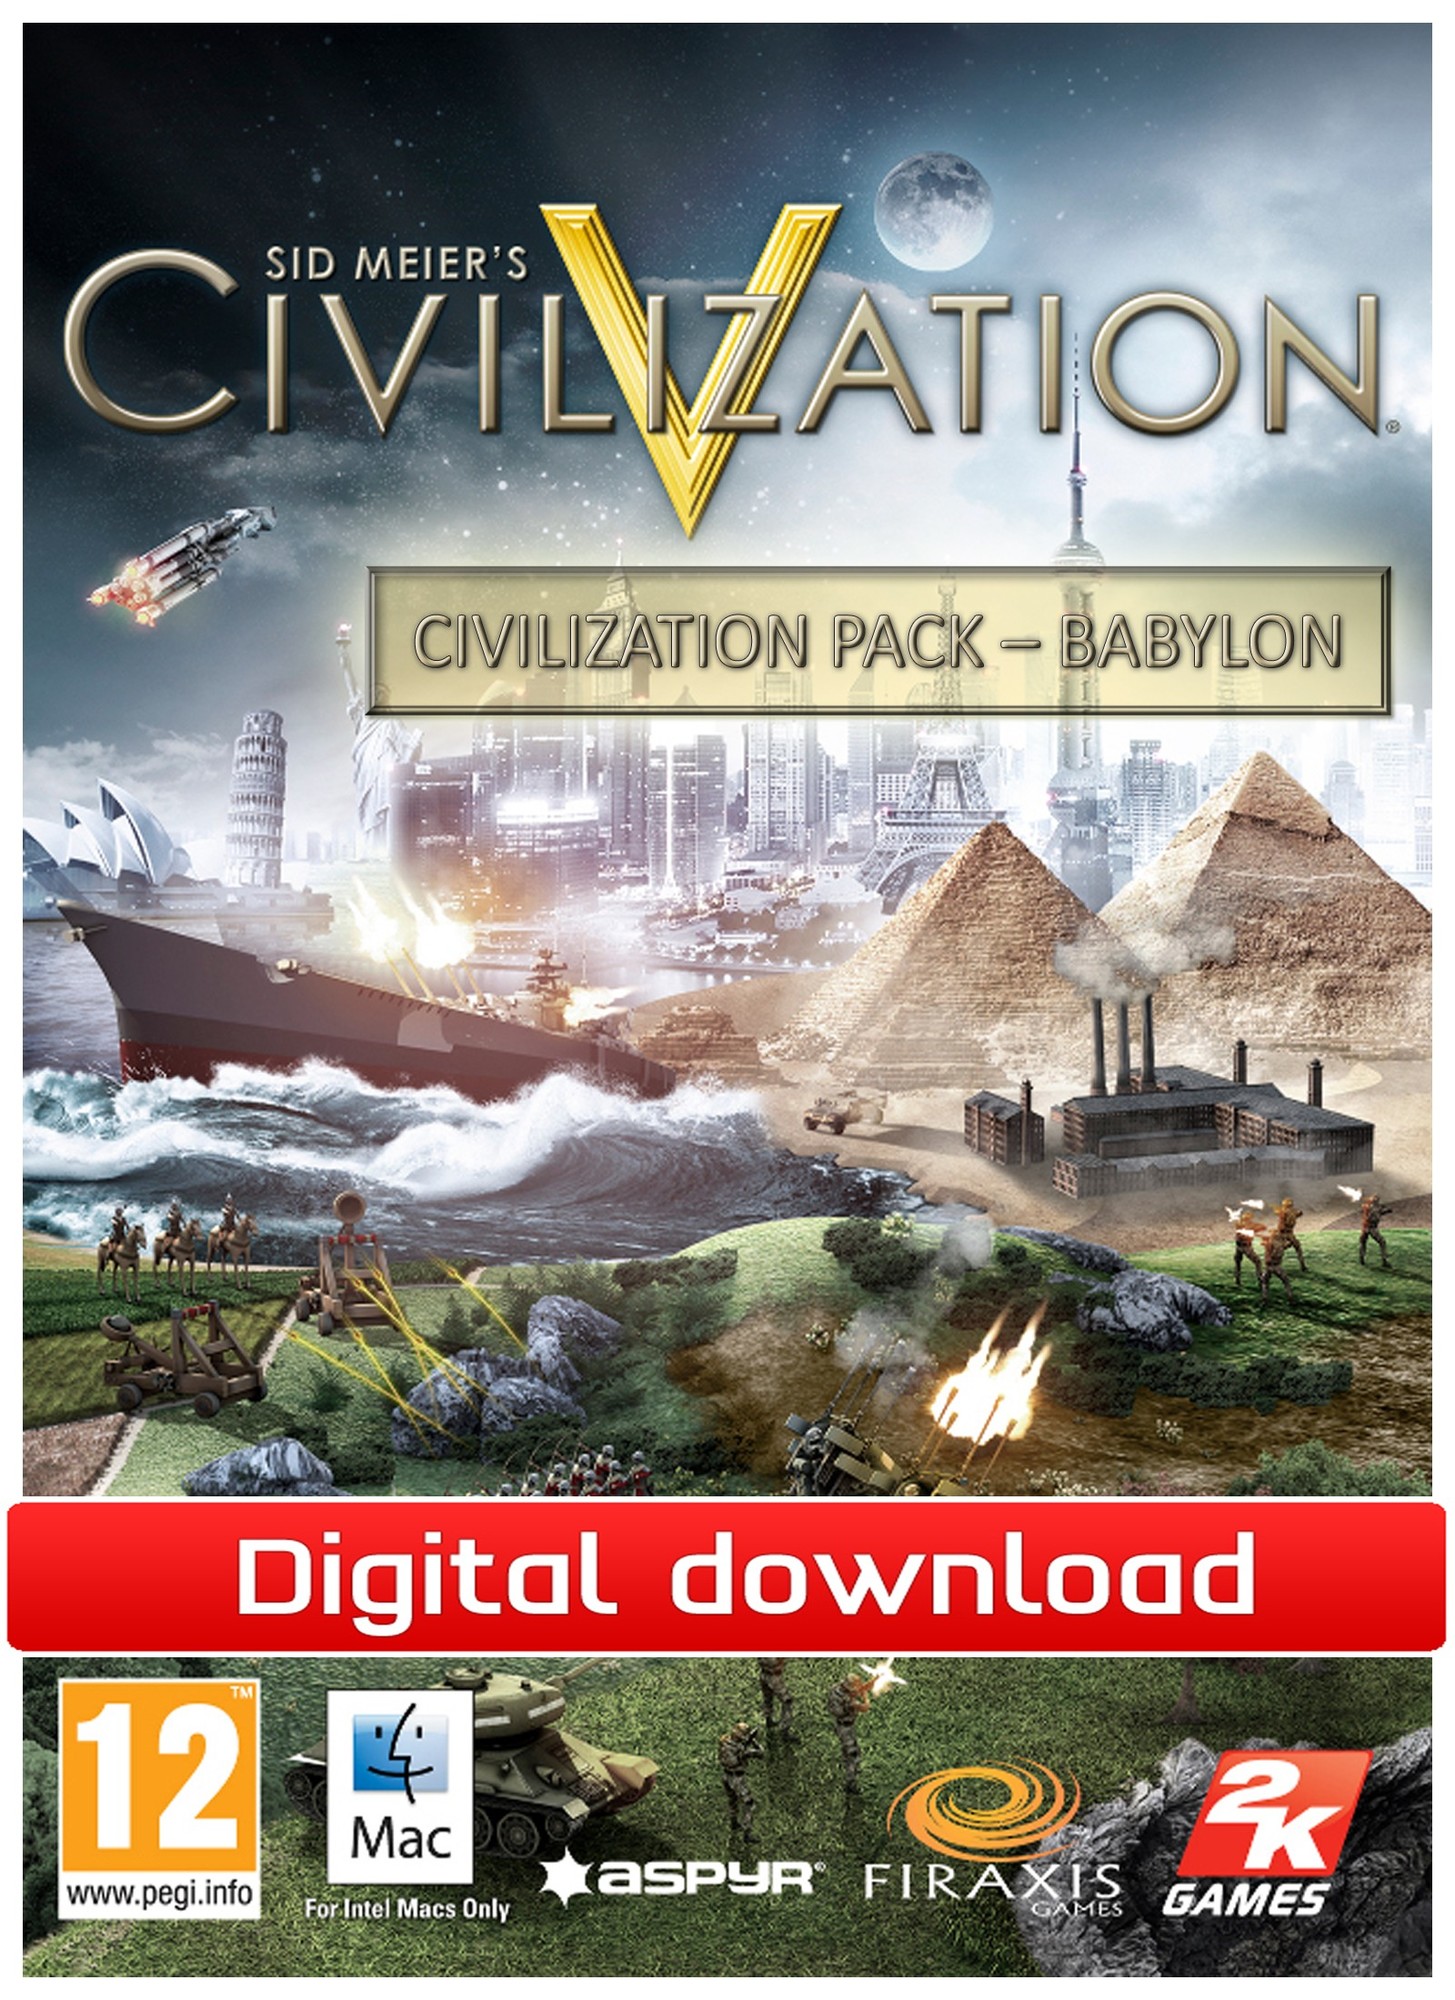 Civilization 5 download for mac